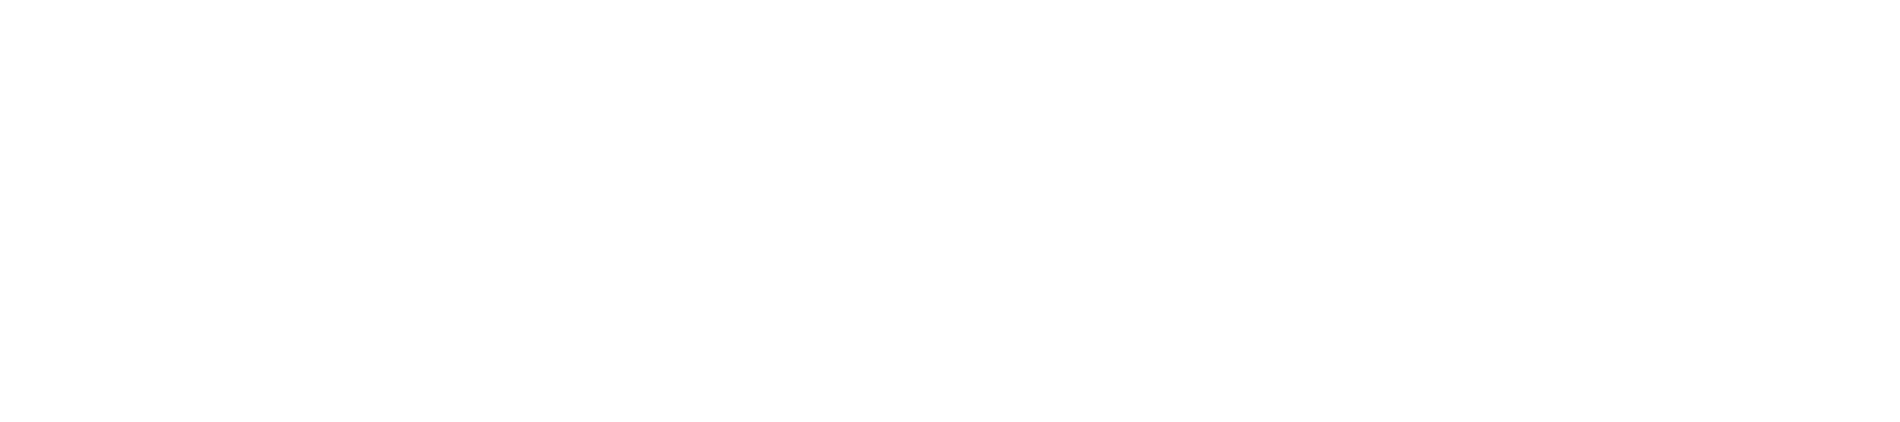 Colorado Minerals Fossils & Gems Show